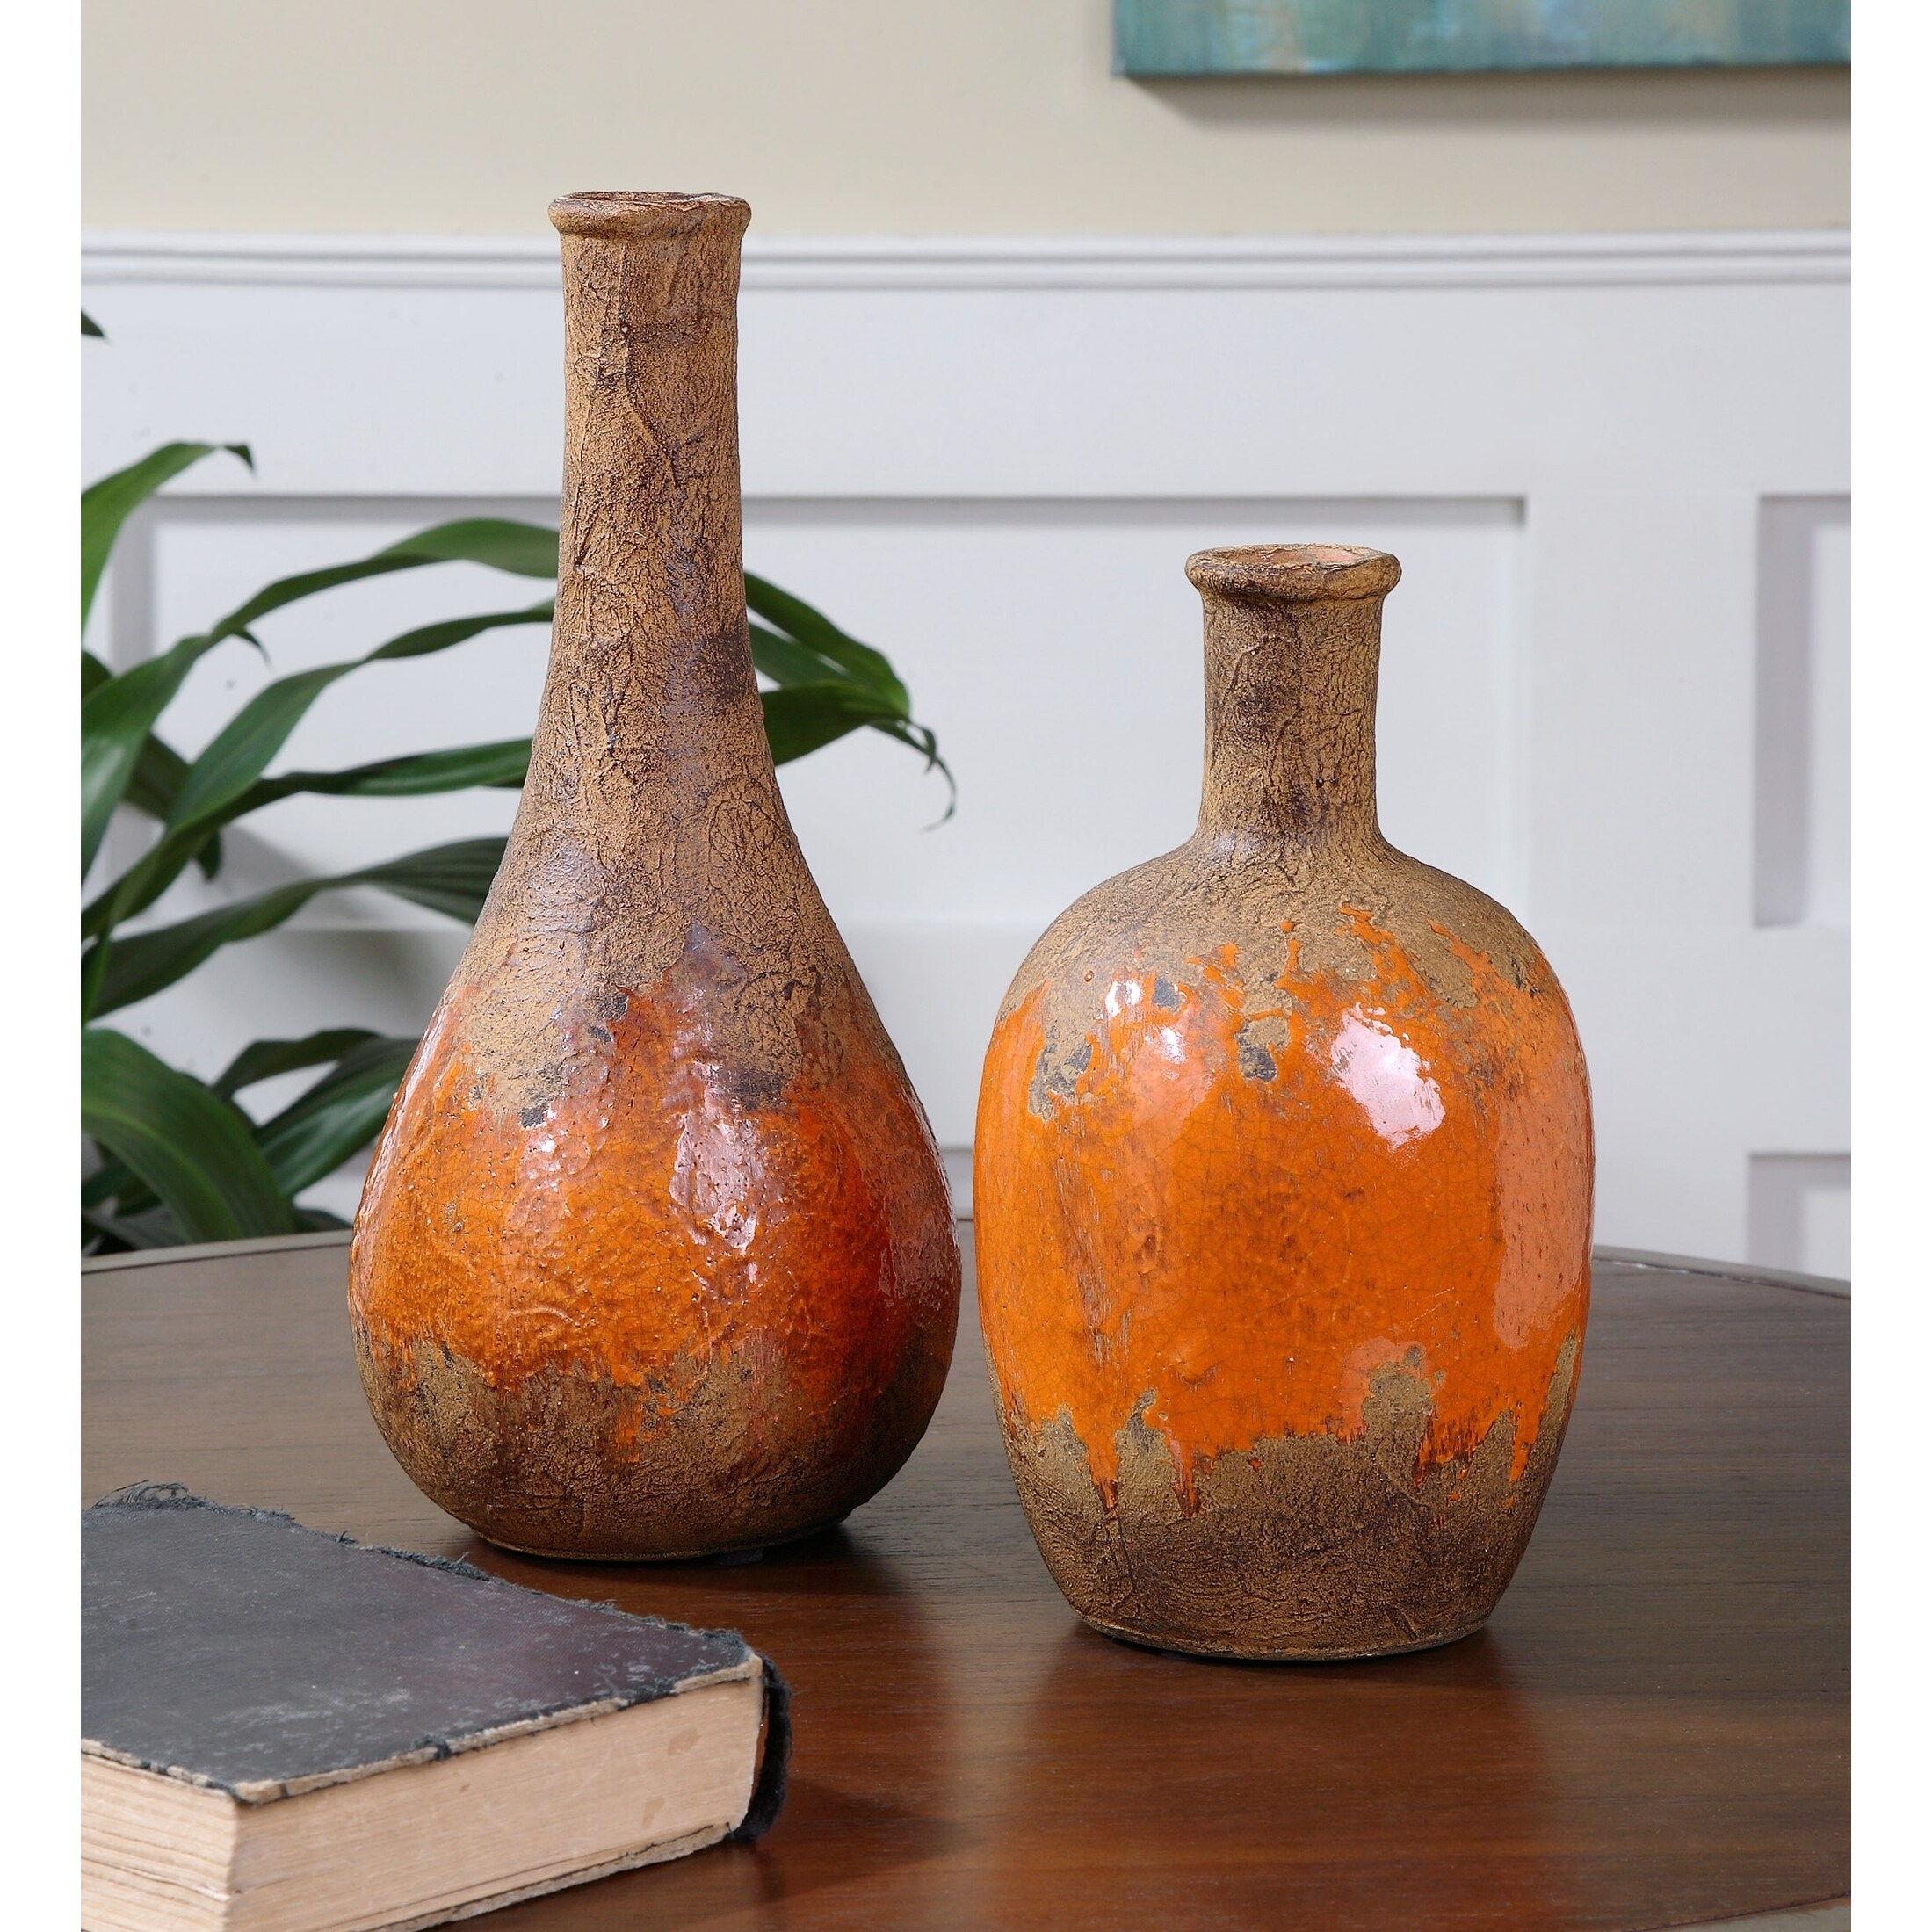 https://ak1.ostkcdn.com/images/products/9091288/Uttermost-Kadam-Orange-Ceramic-Vases-Set-of-2-908383af-c3c9-4d75-a55f-c6c7285e5713.jpg